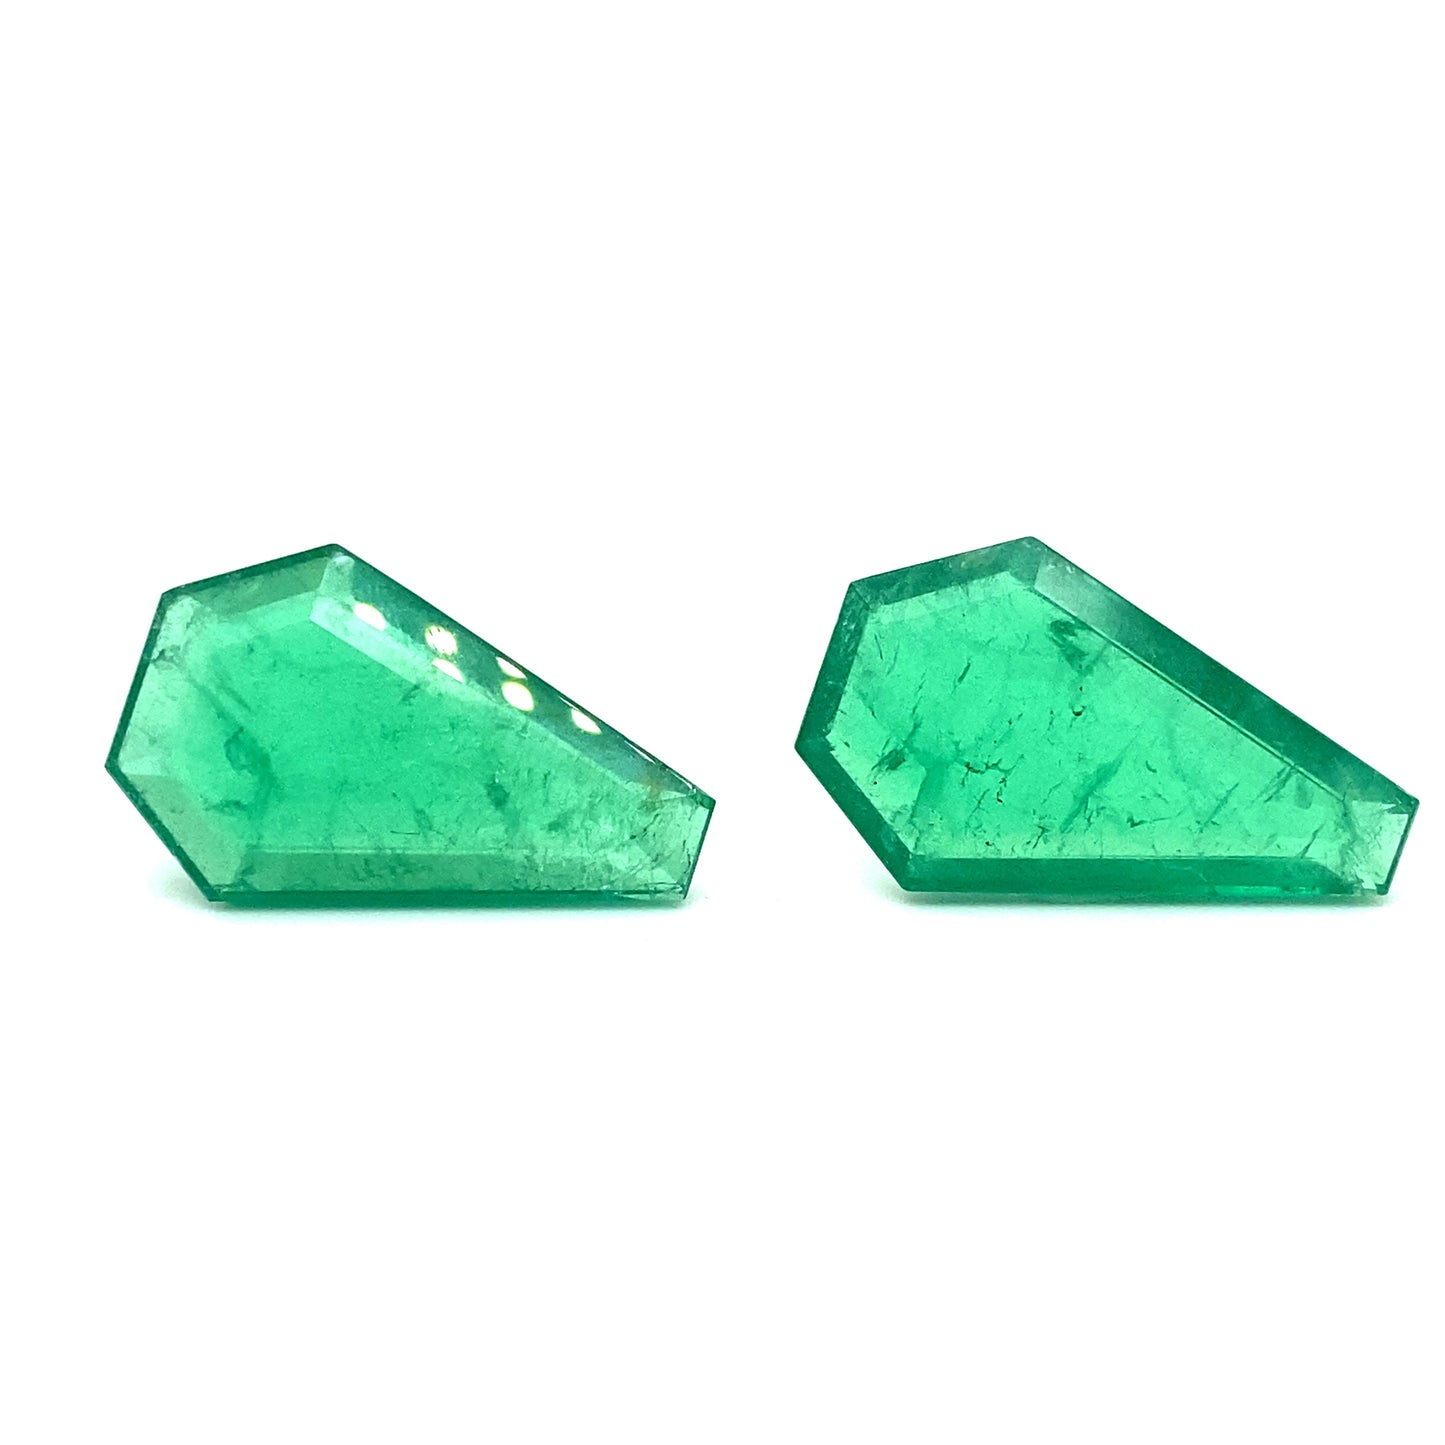 
                  
                    34.78x21.50x7.71mm Fancy Cut Emerald (2 pc 75.82 ct)
                  
                